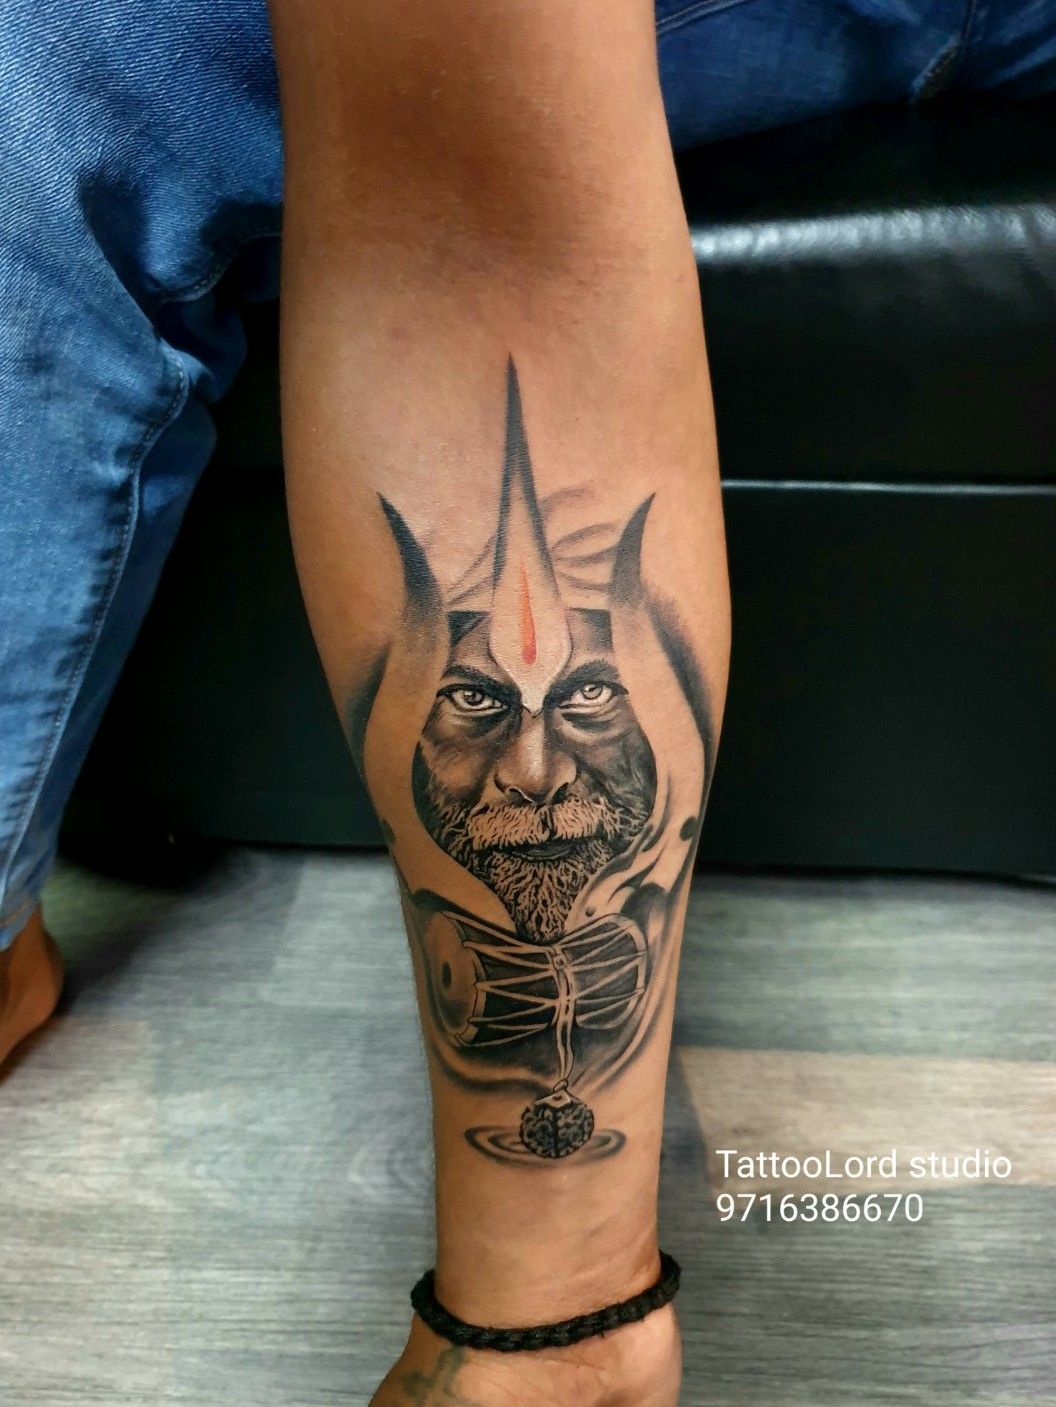 Shiva#Aghori#SatiShivTattoo#Tattoo#Tattoo#customtattoodesign#Design#SagarWaghela#DesignBySagarWaghela  | Shiva tattoo, Shiva tattoo design, Tattoo designs